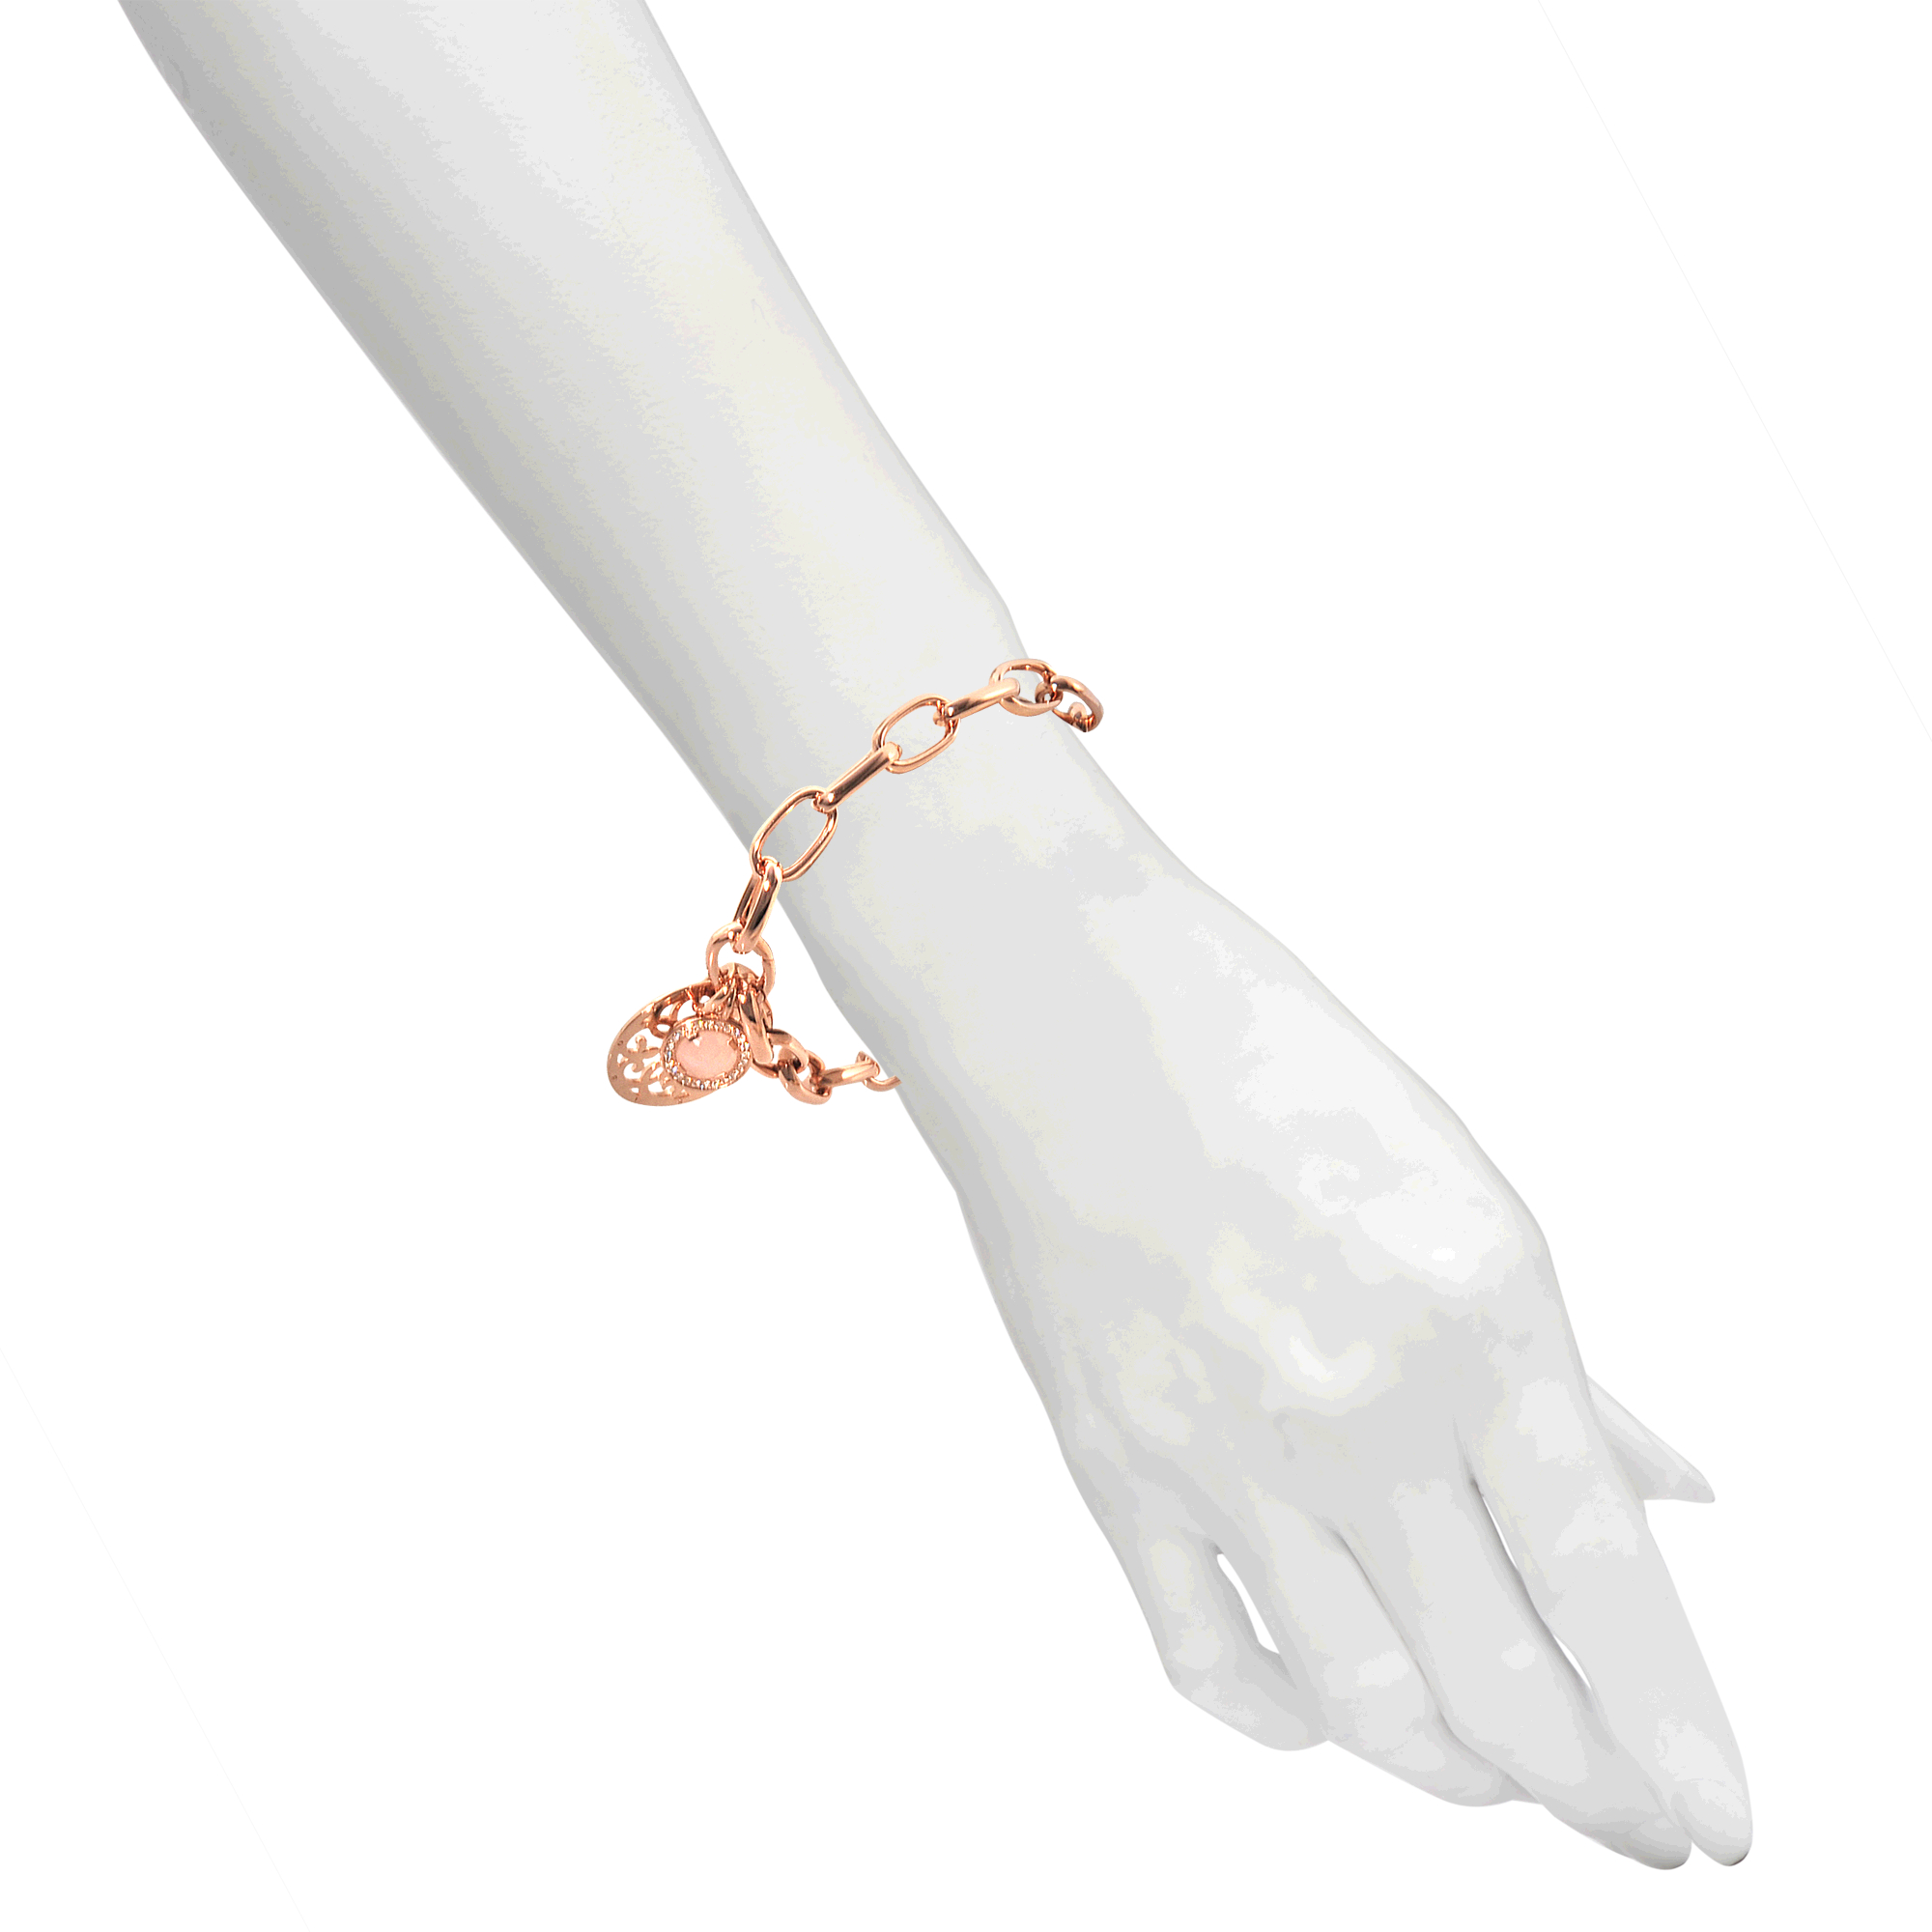 Thomas Sabo Rose Gold Charm Bracelet in Pink - Lyst